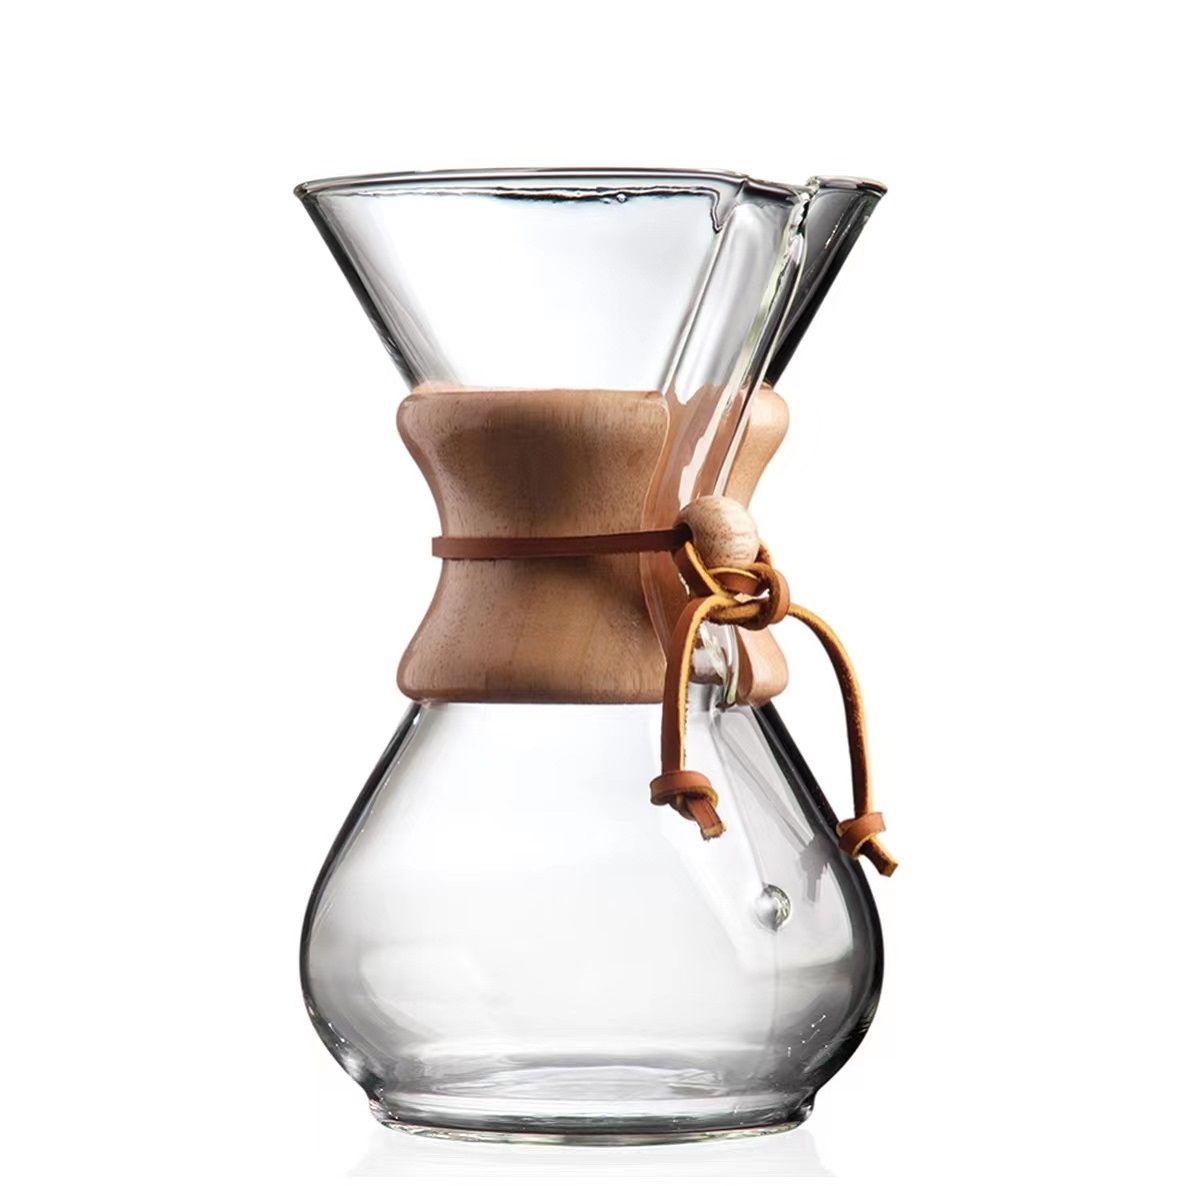 Chemex Coffee Maker - Classic Six Cup